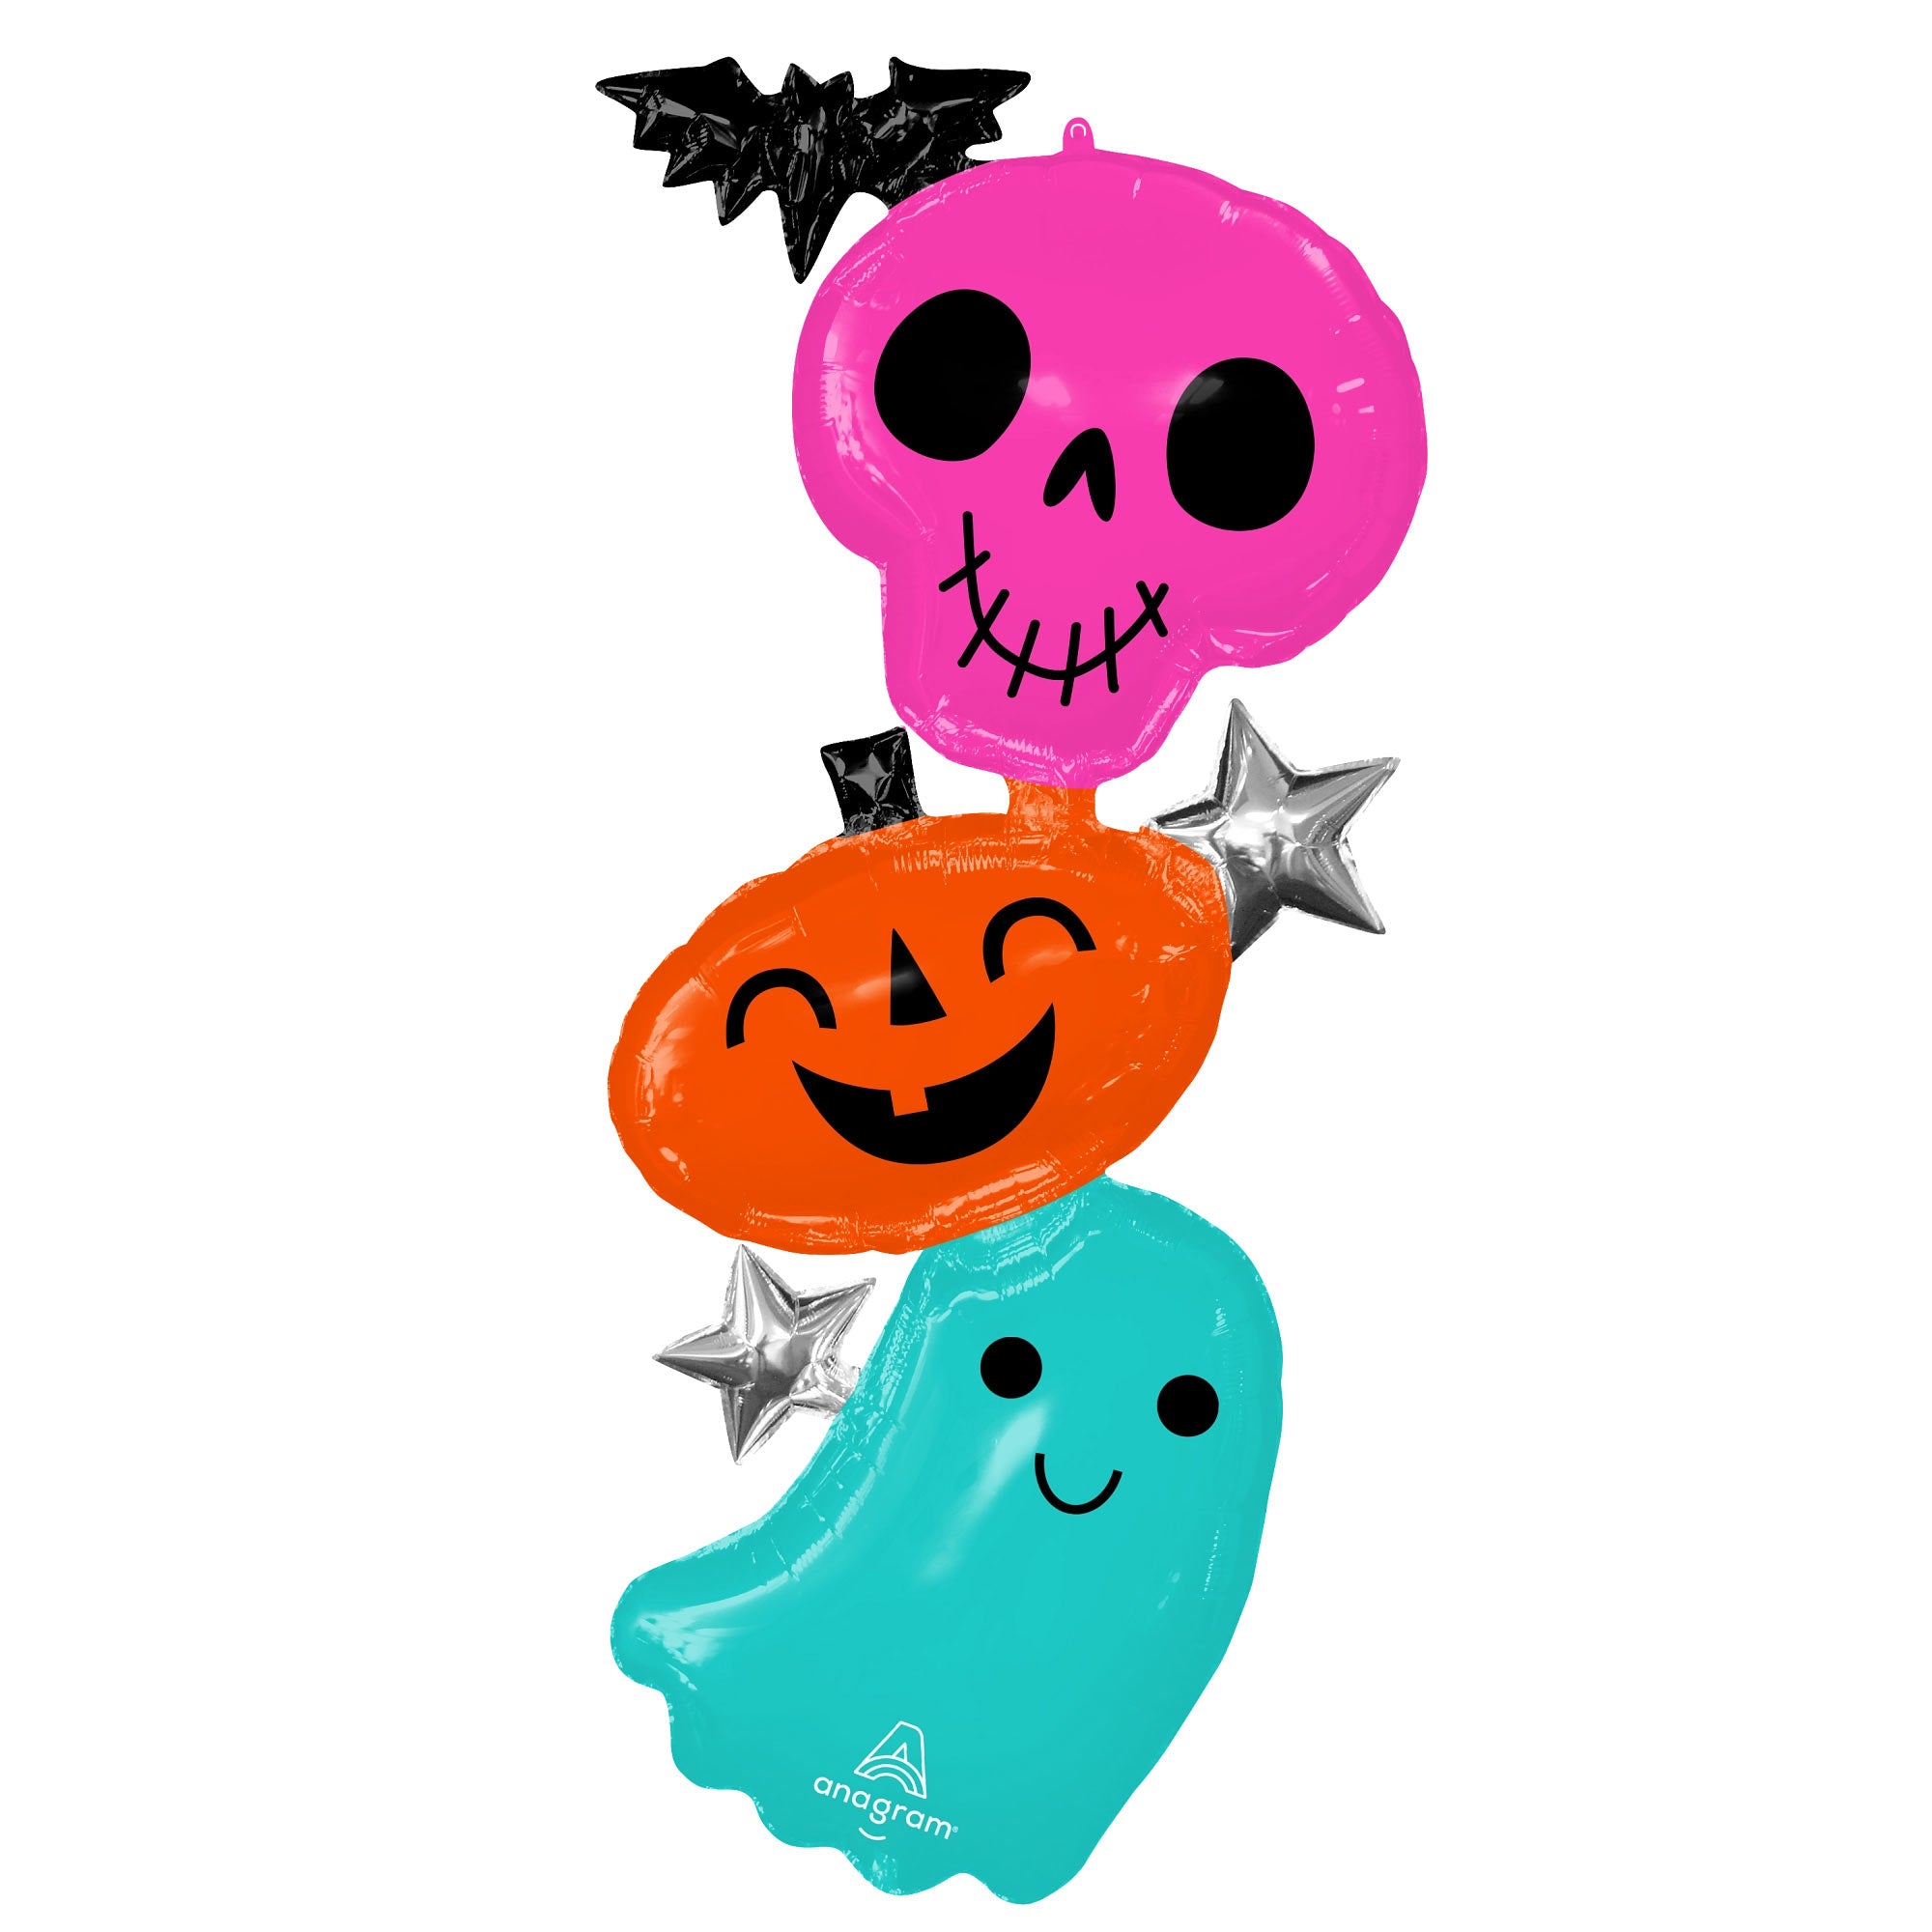 Mutli-Balloon Colorful & Creepy Halloween Characters